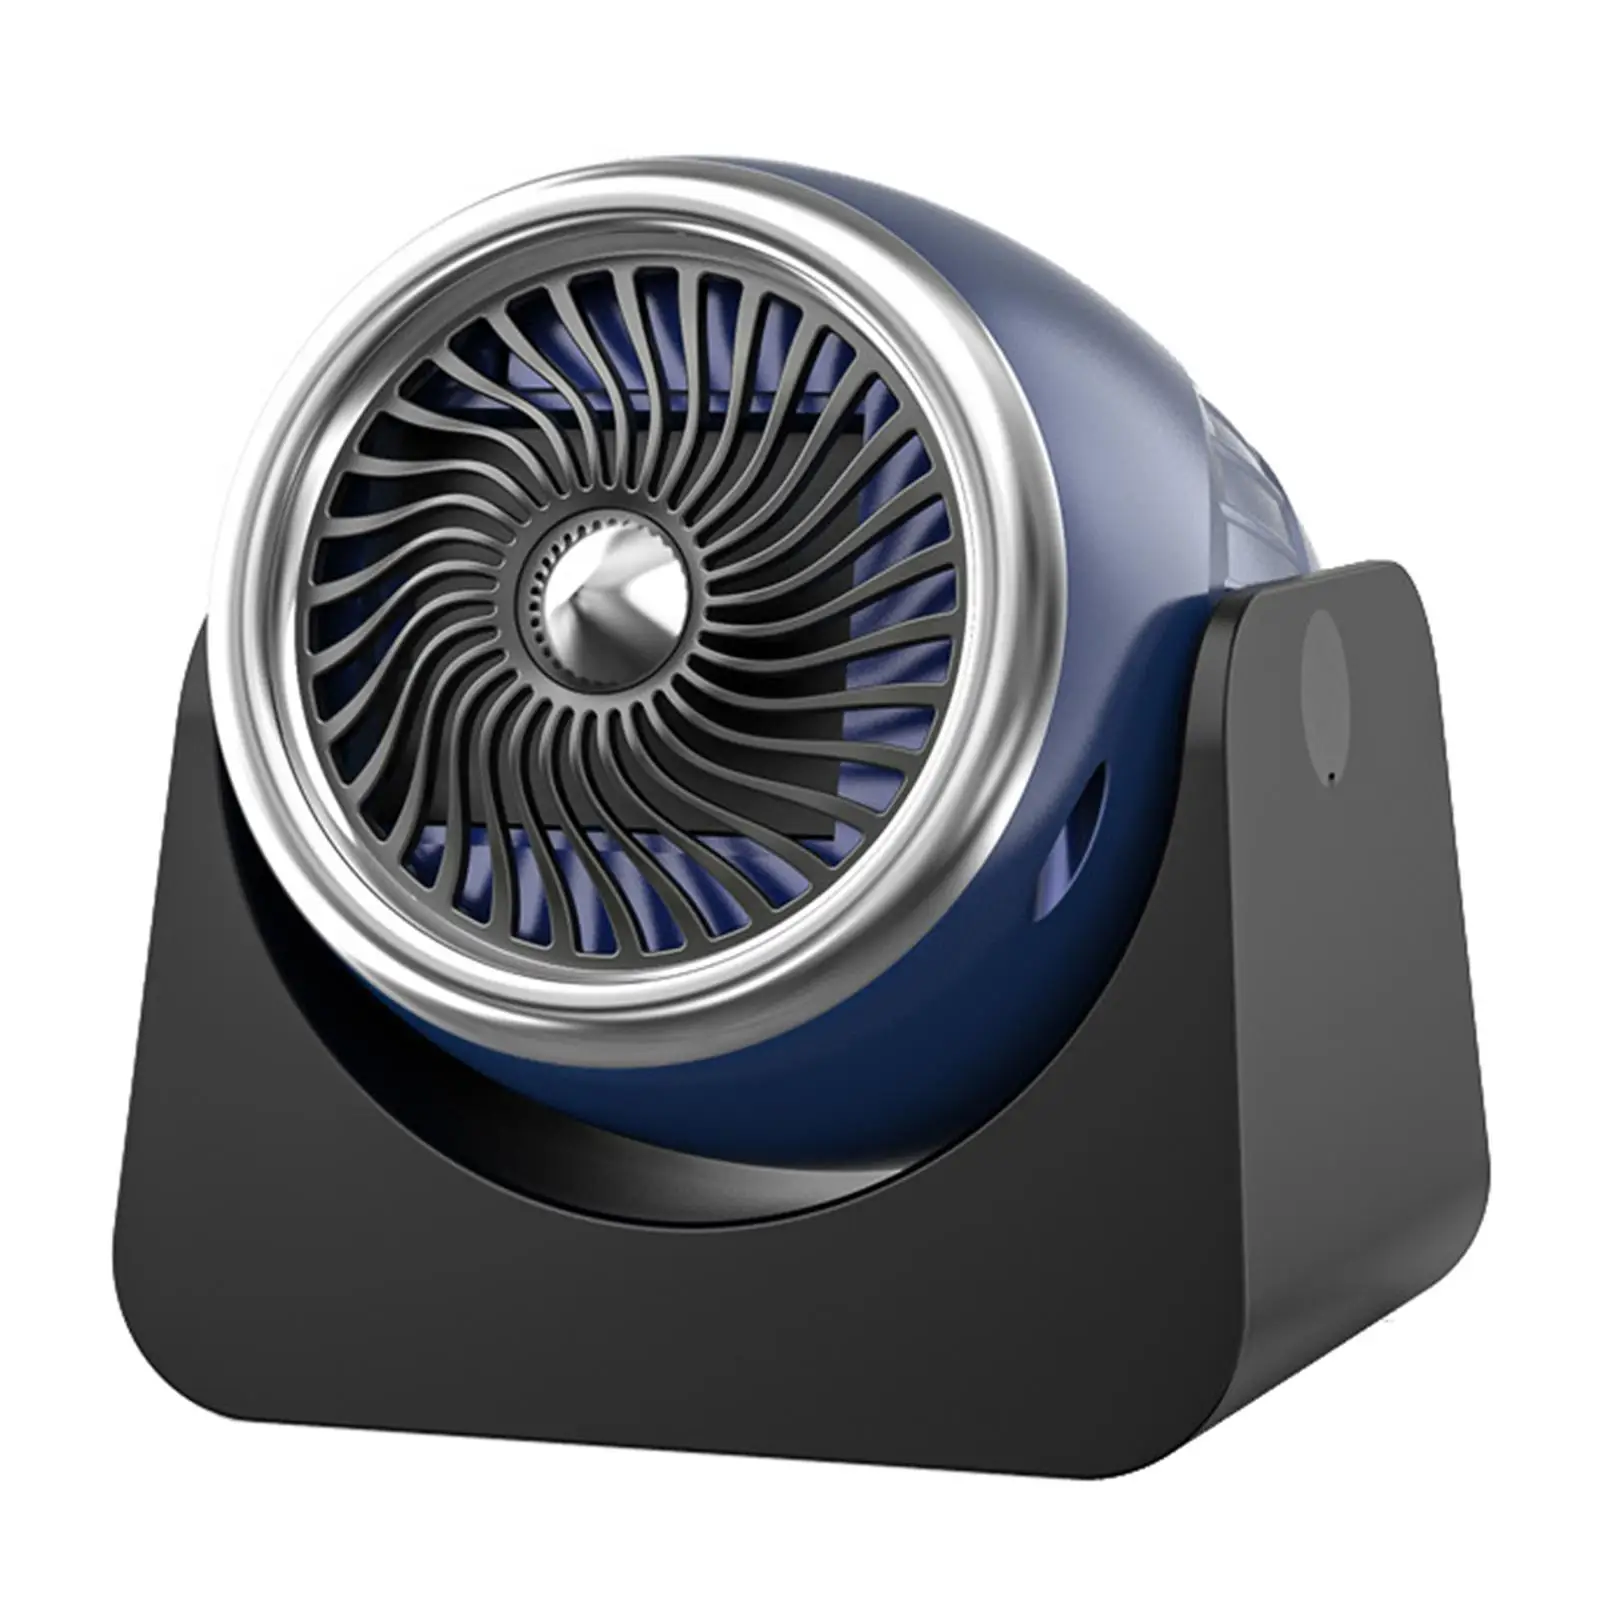 12V Car Heater Fan Electric Ptc Heating 140W One Button Switch Warmer Fan for Winter Windshield Office Hotel Vehicle Parts